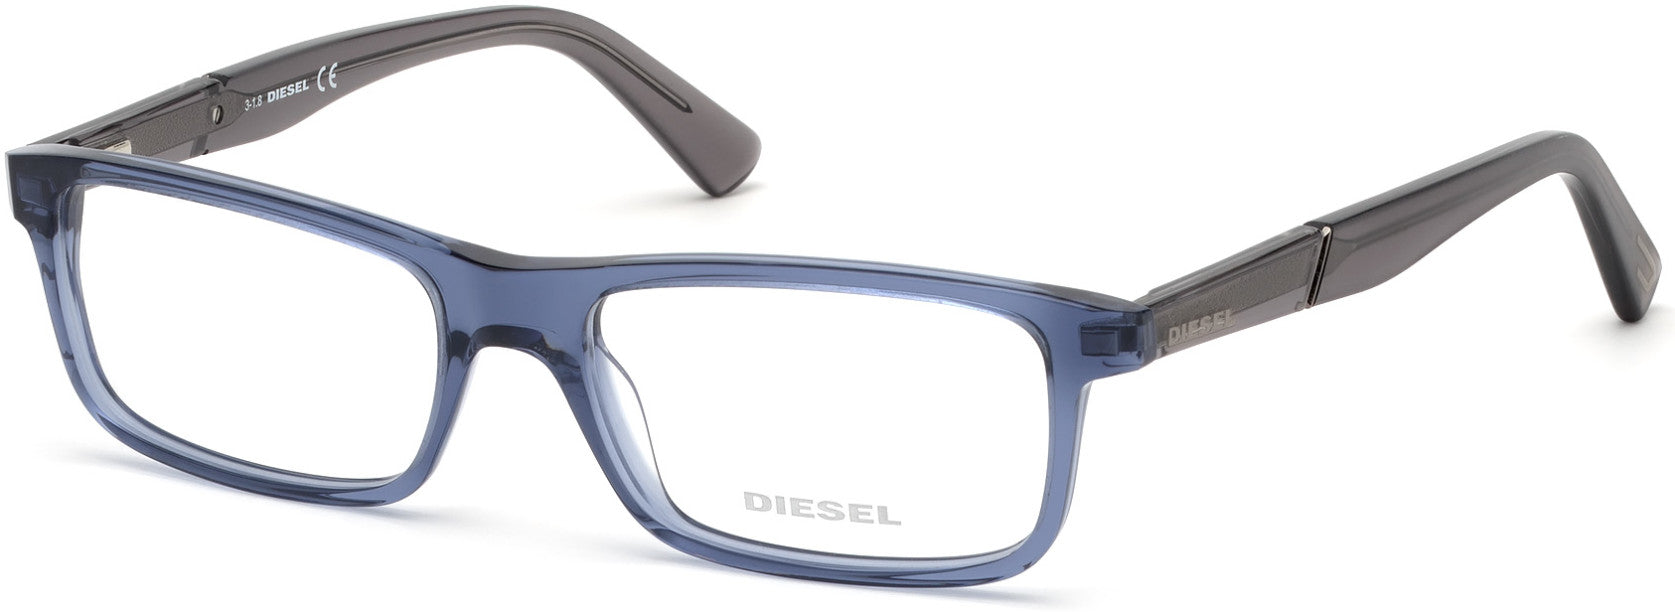 Diesel DL5292 Rectangular Eyeglasses 090-090 - Shiny Blue